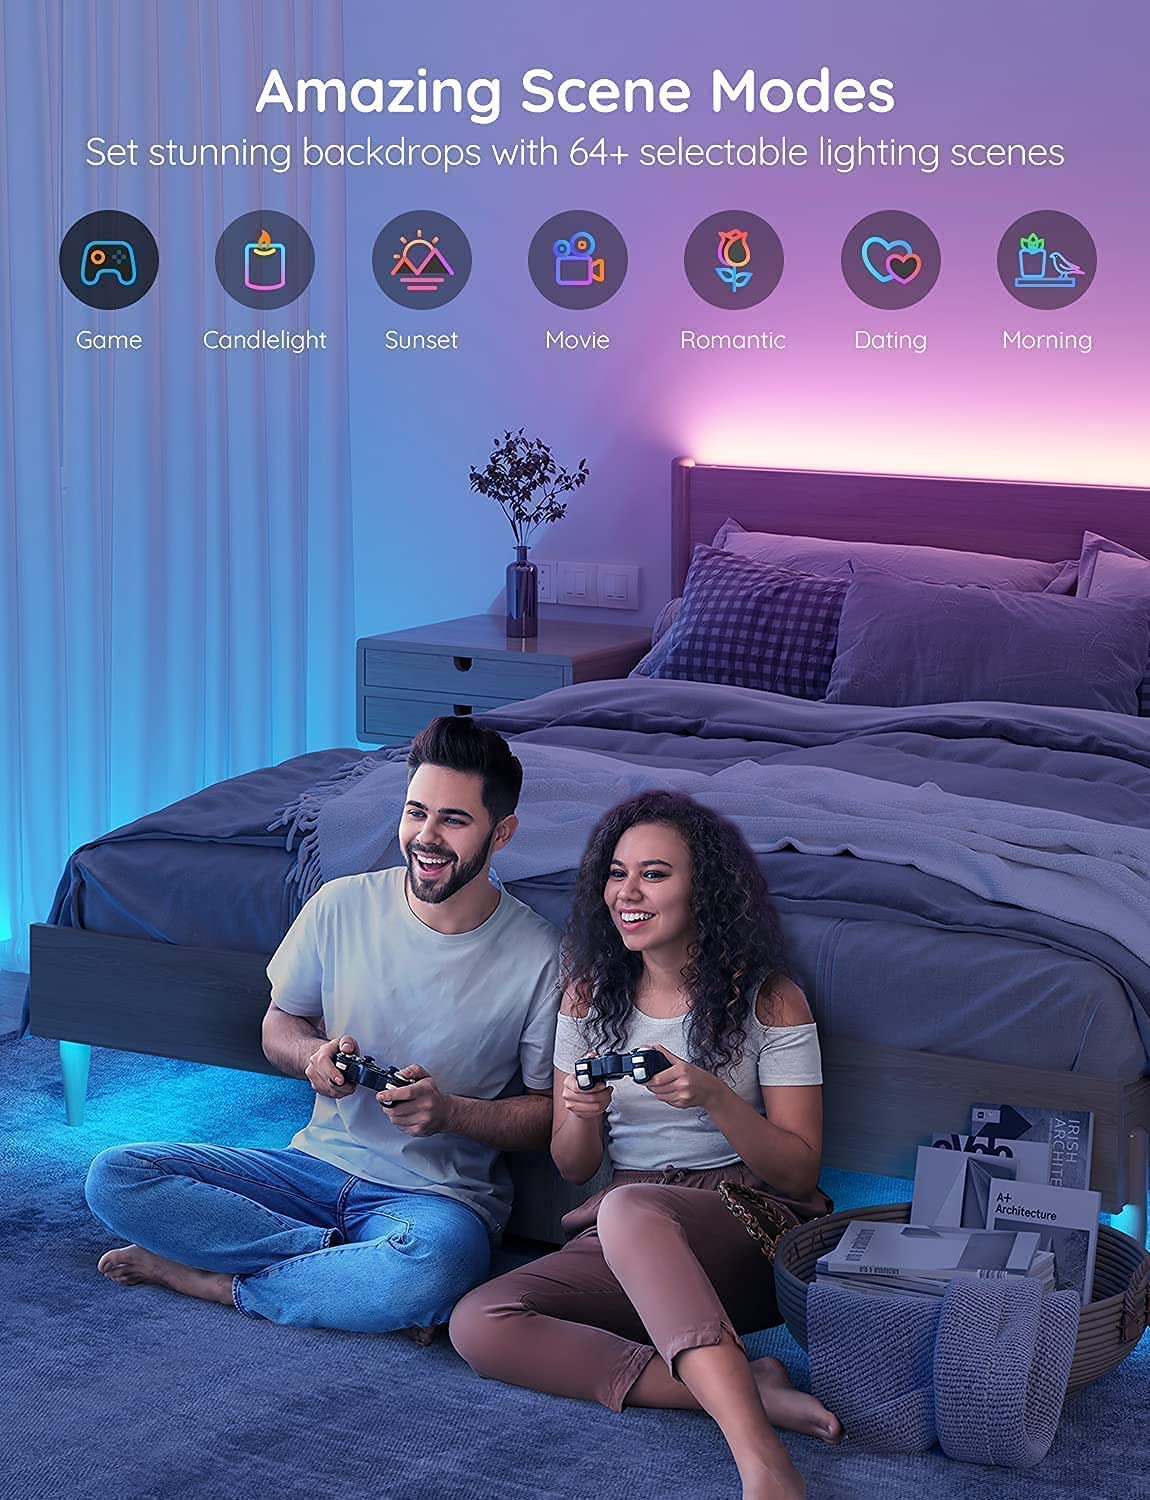 Govee Smart LED Strip Lights, 10M WiFi LED Light Strip Alexa